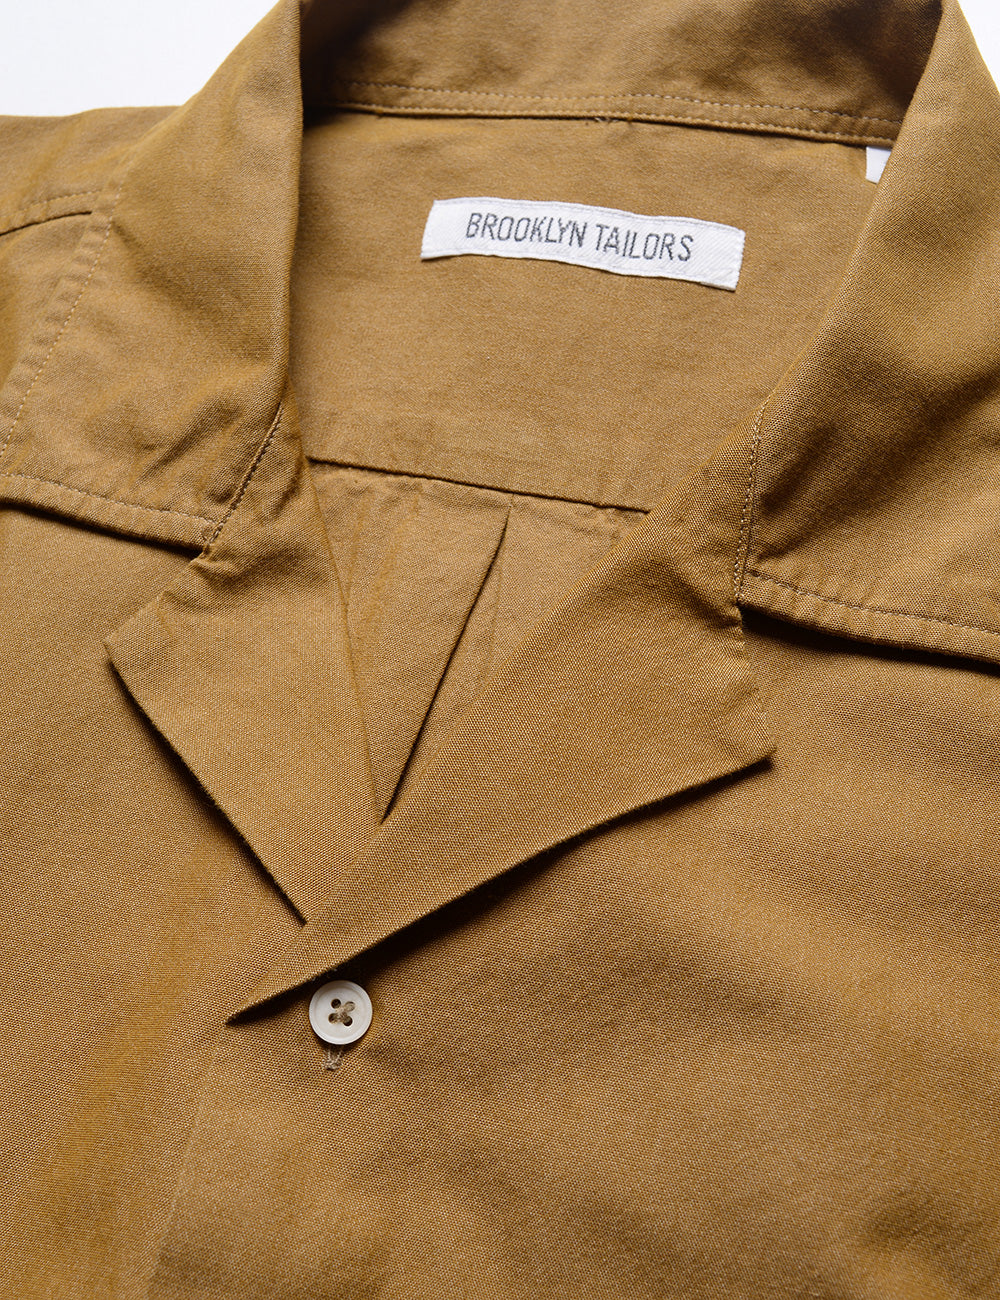 BKT18 Camp Shirt in Crisp Poplin - Mustard – Brooklyn Tailors